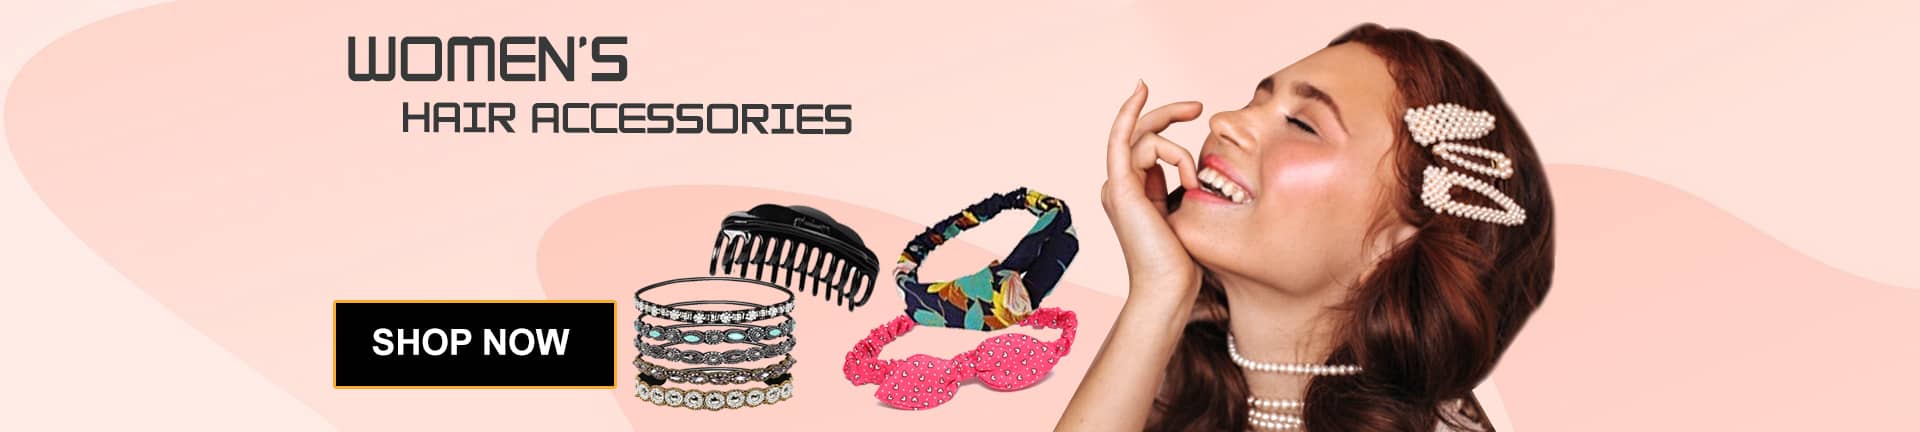 Women's Hair Accessories at Best Price in Pakistan - Kayazar.com